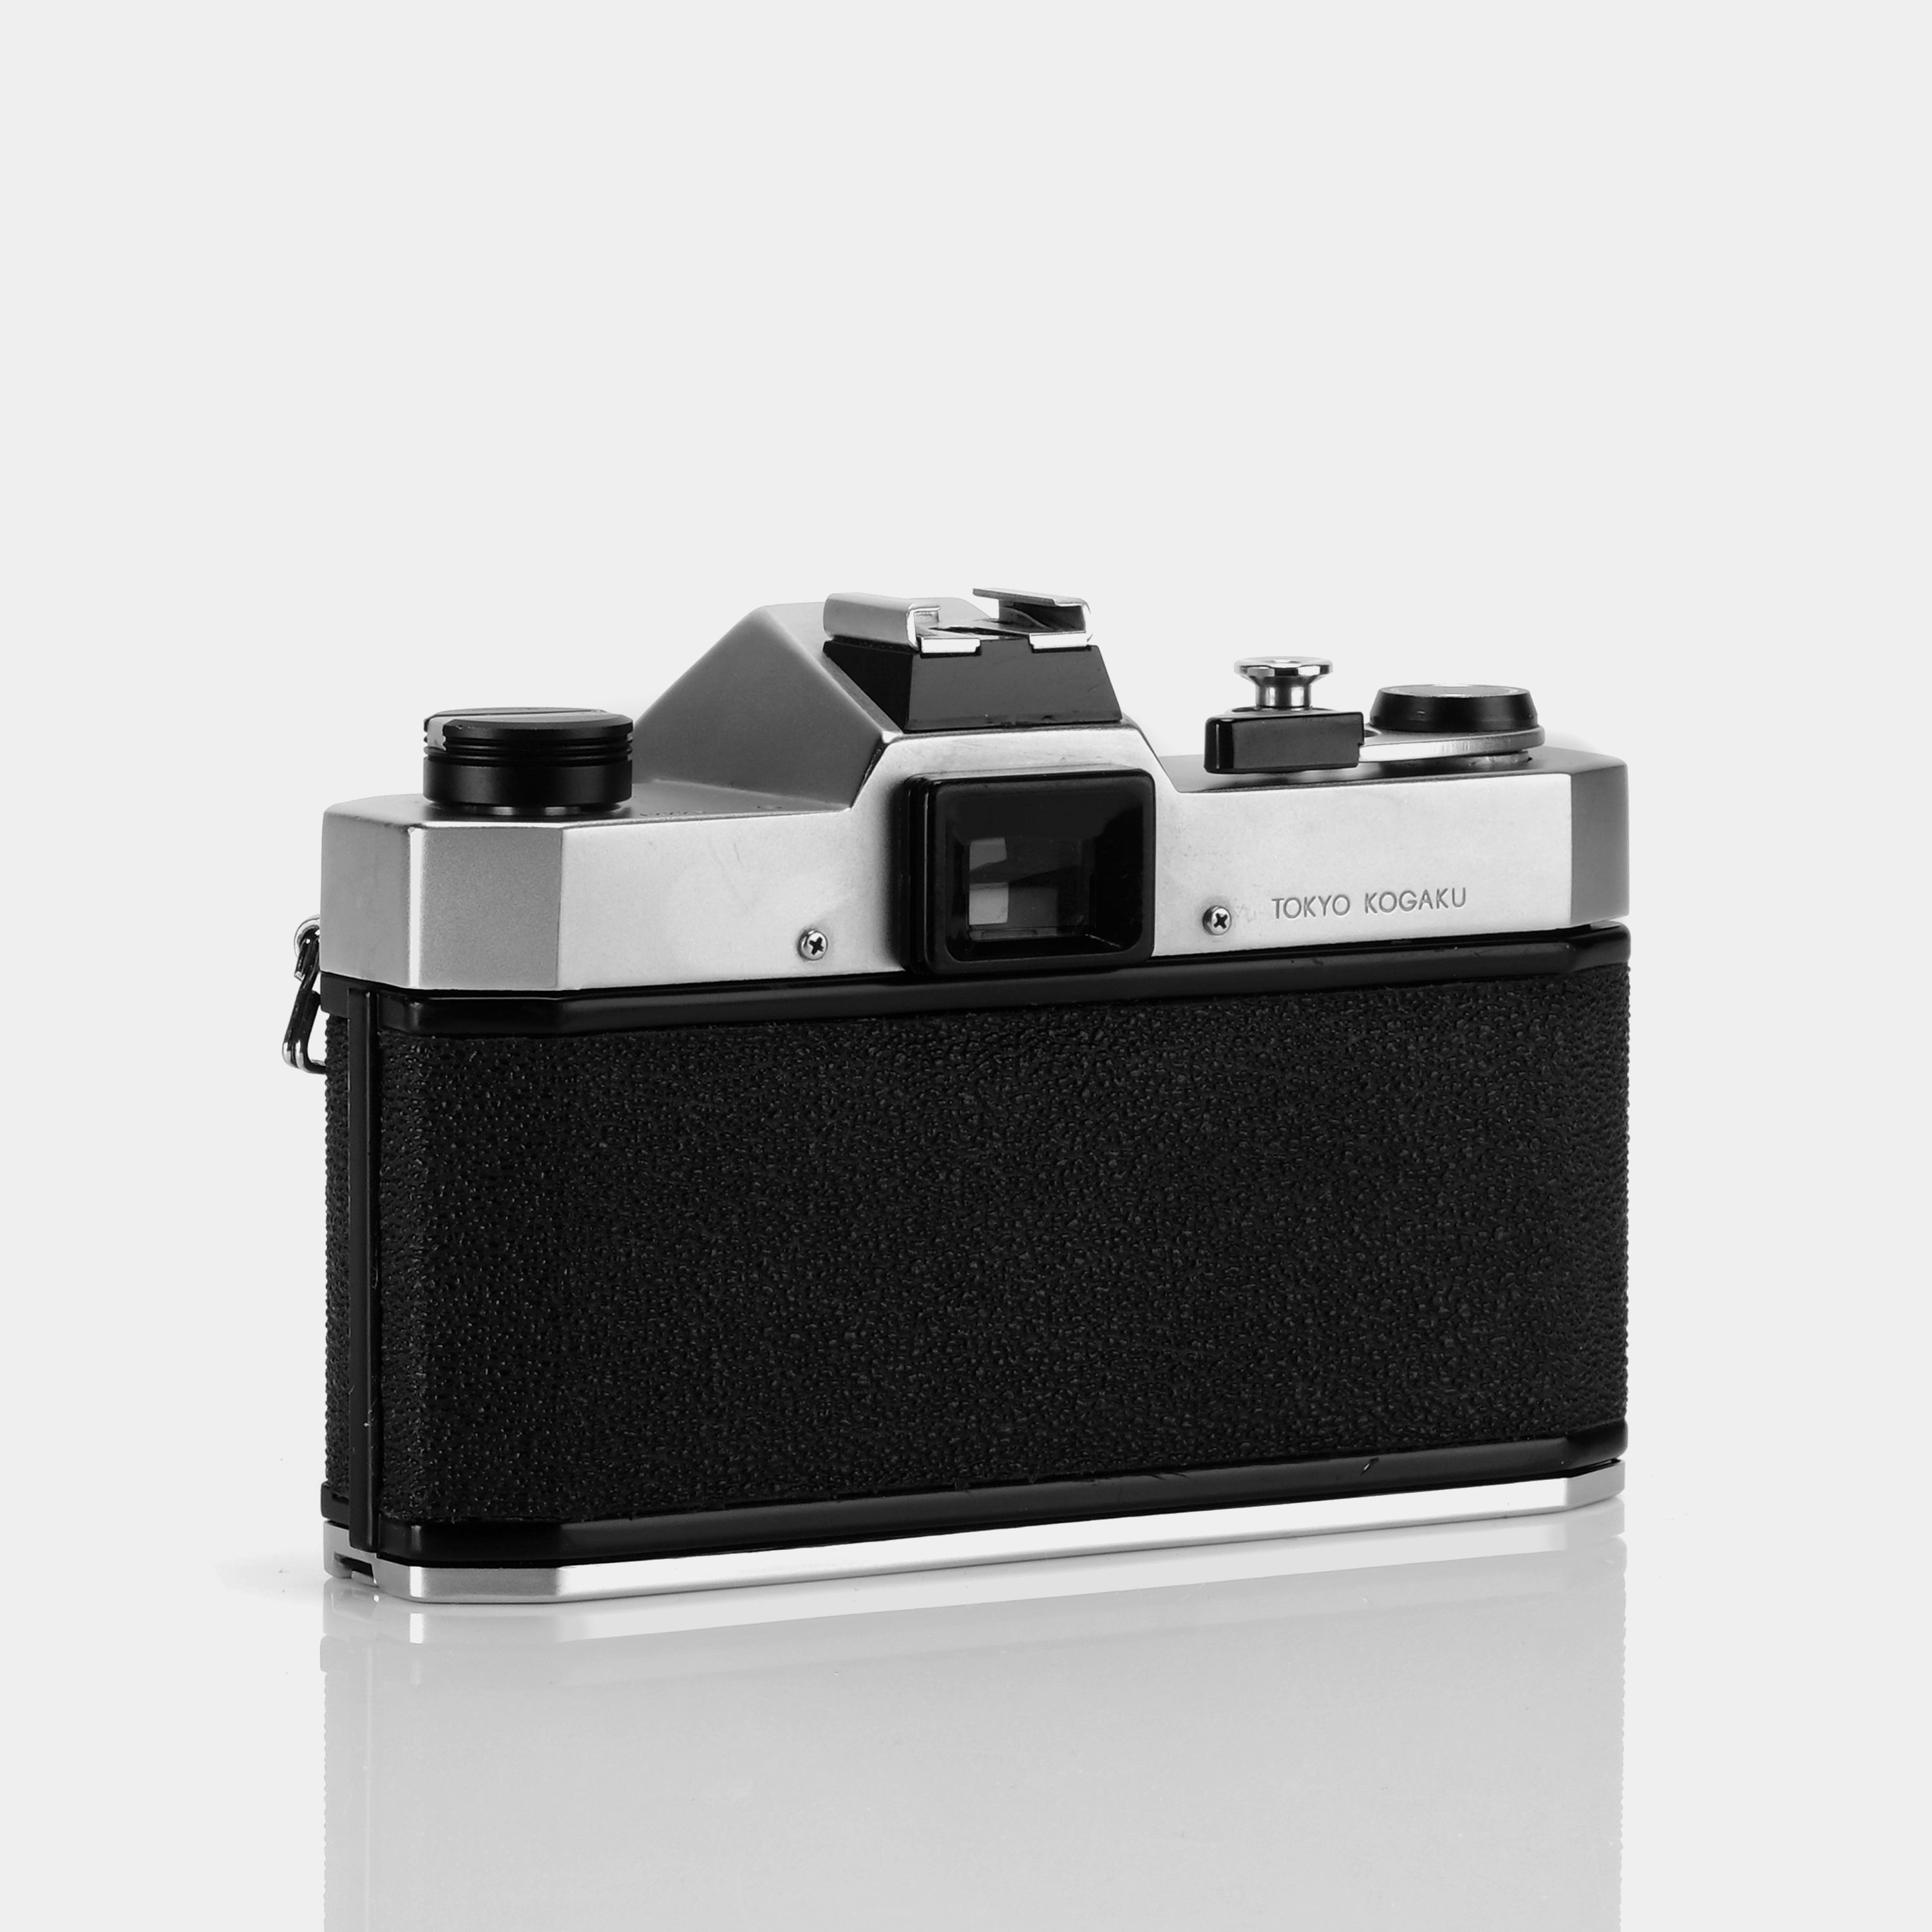 Topcon Unirex 35mm SLR Film Camera